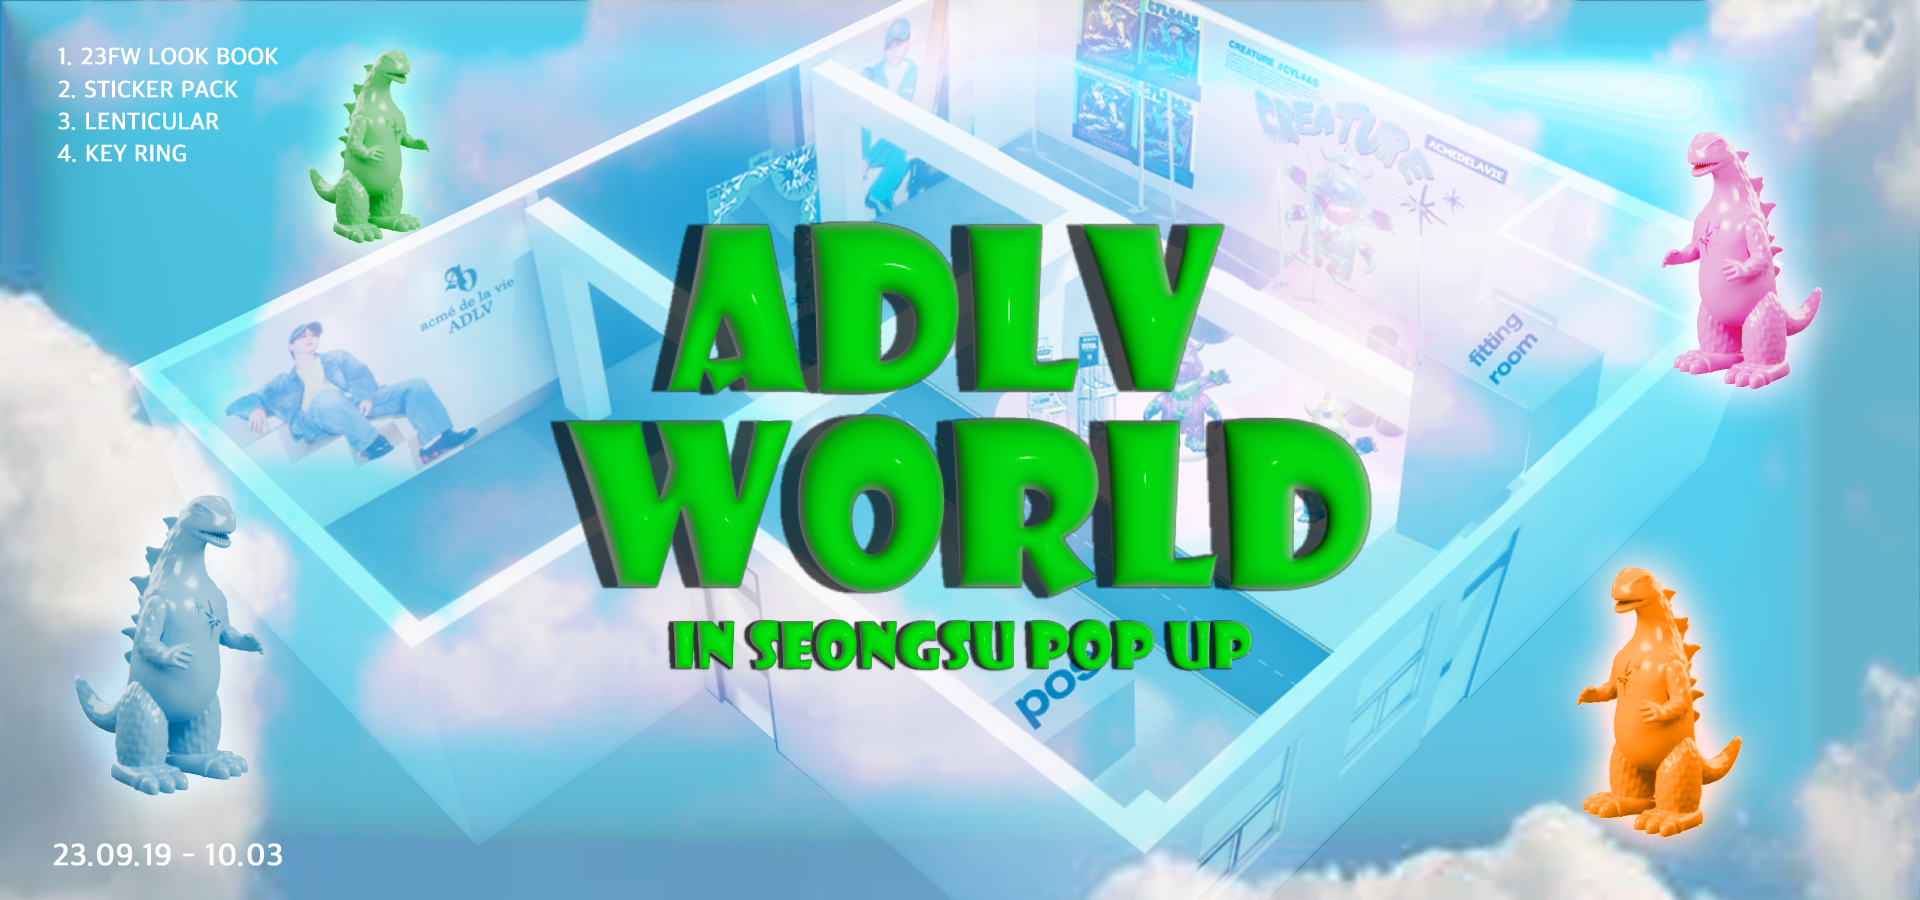 ADLV WORLD in Seongsu POP UP